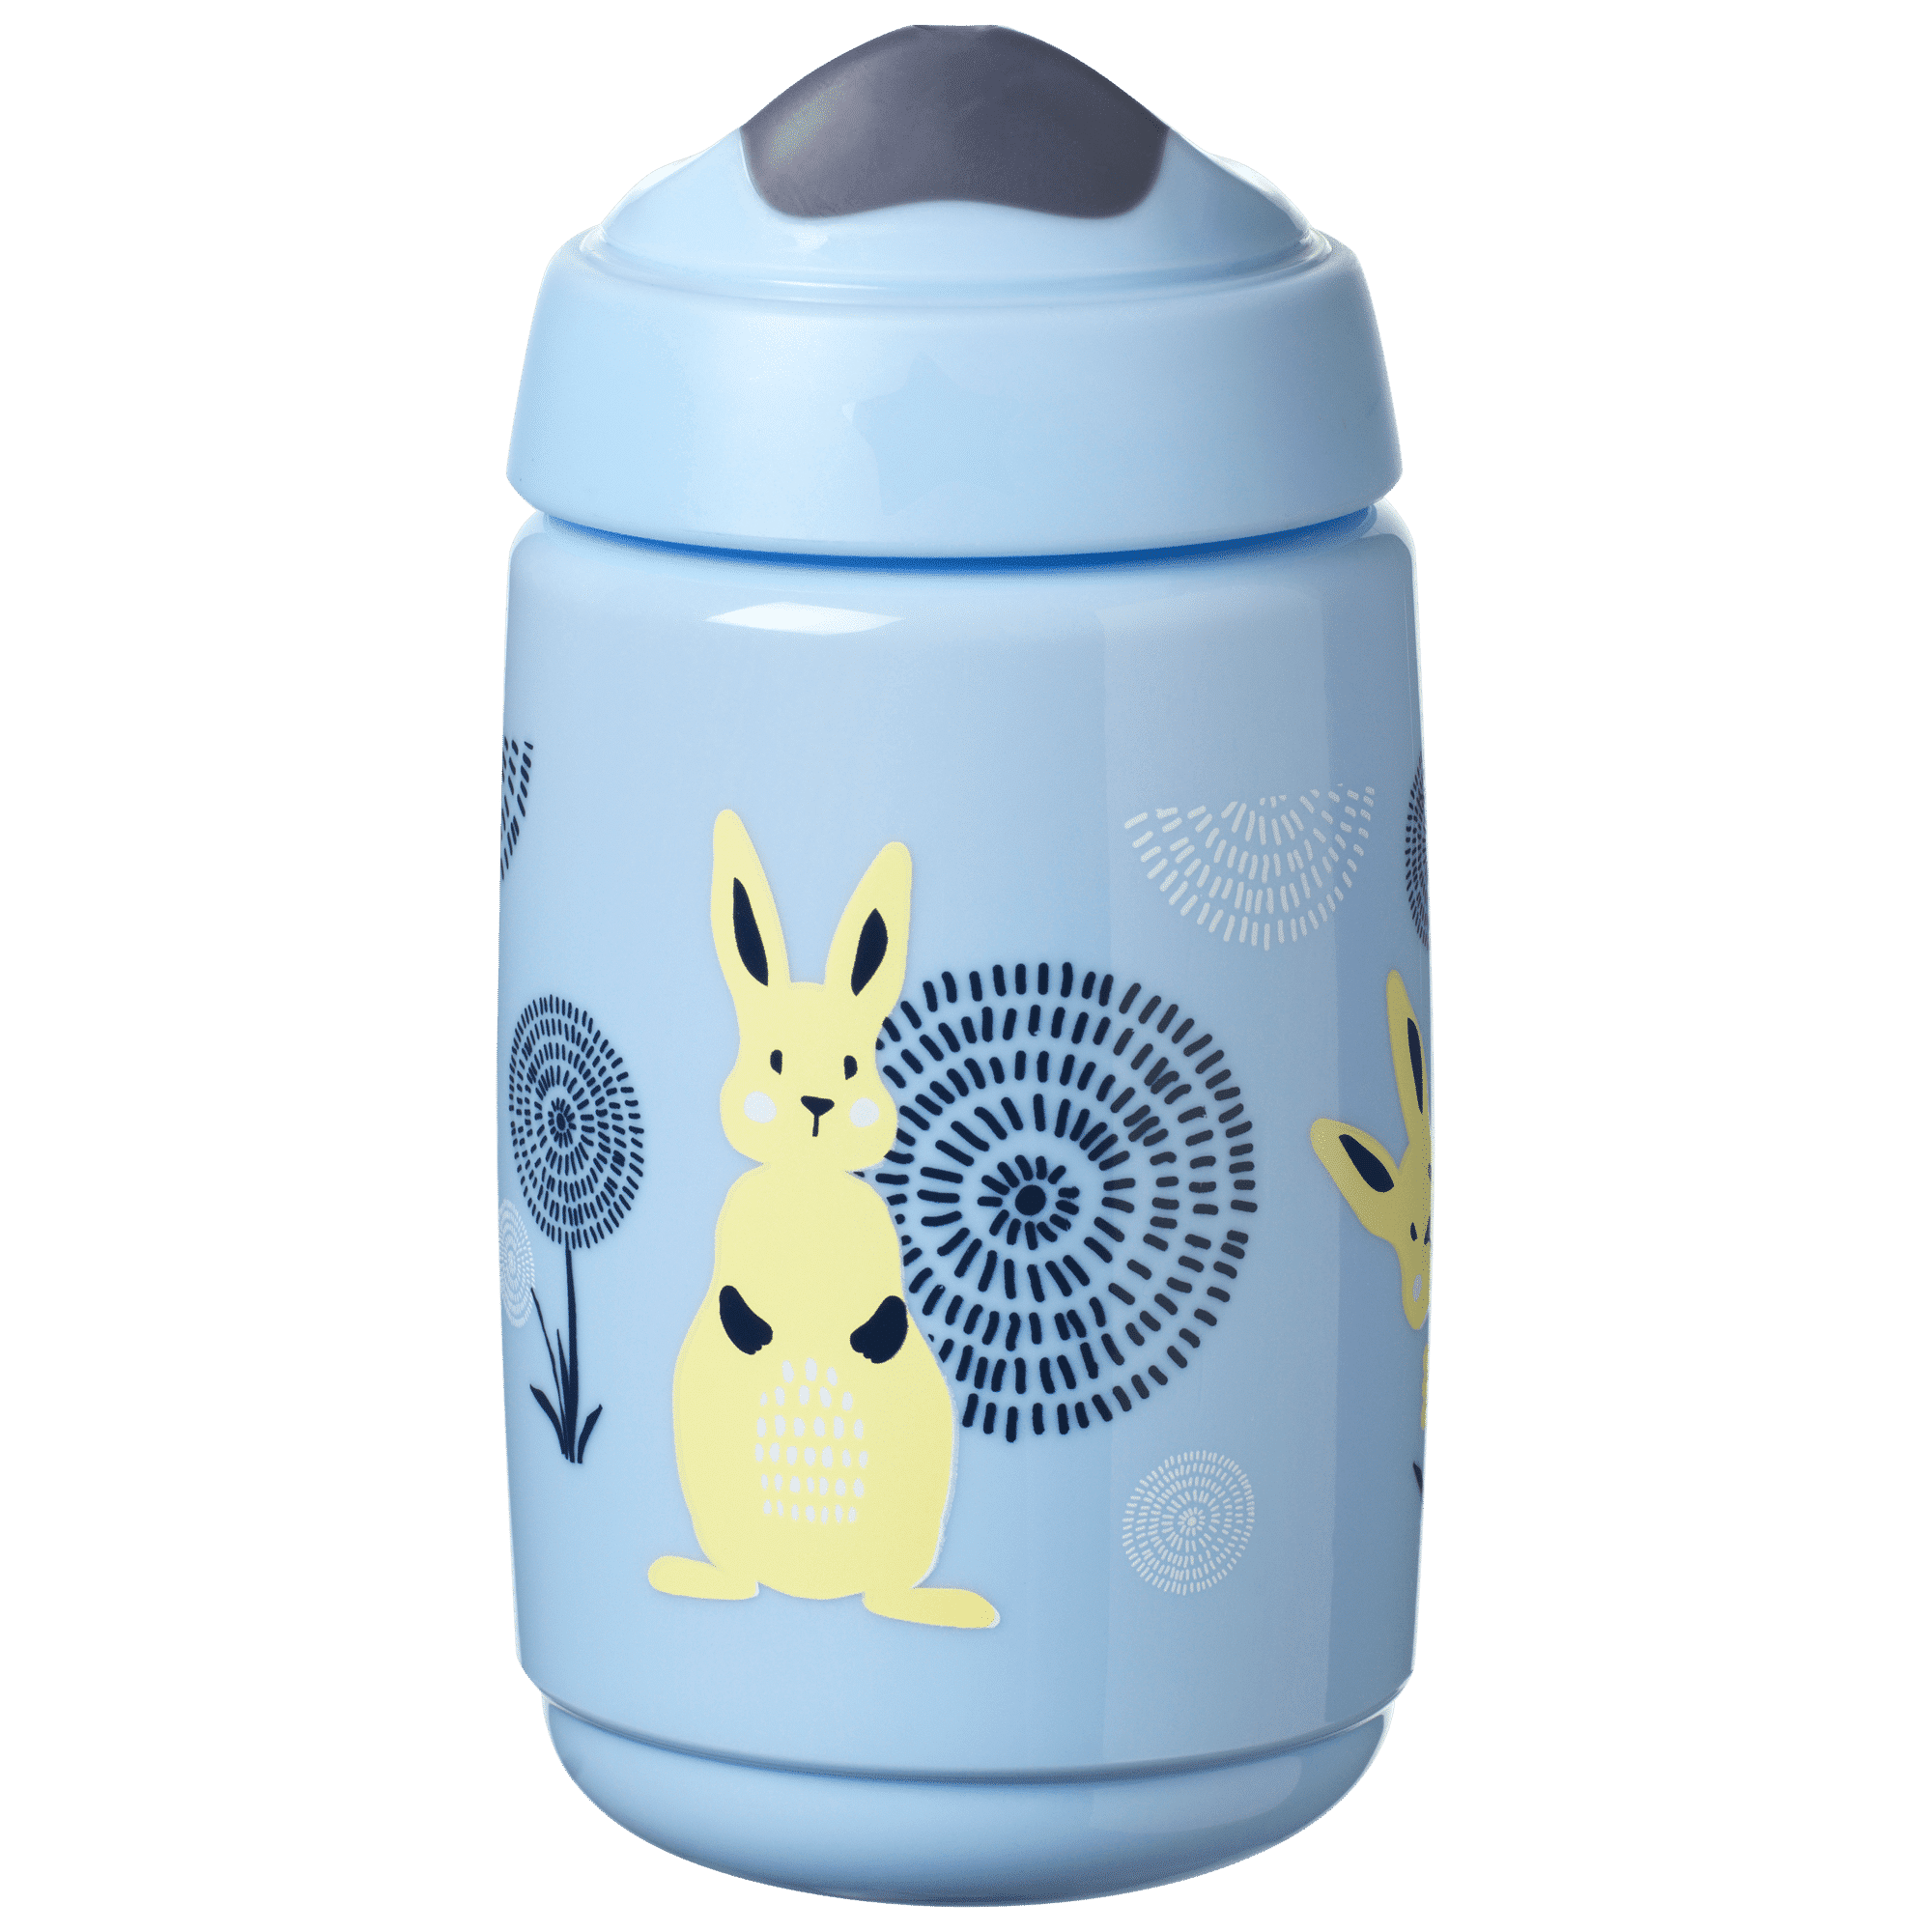  NUK - Gran vaso antigoteo para aprender a beber : Bebés